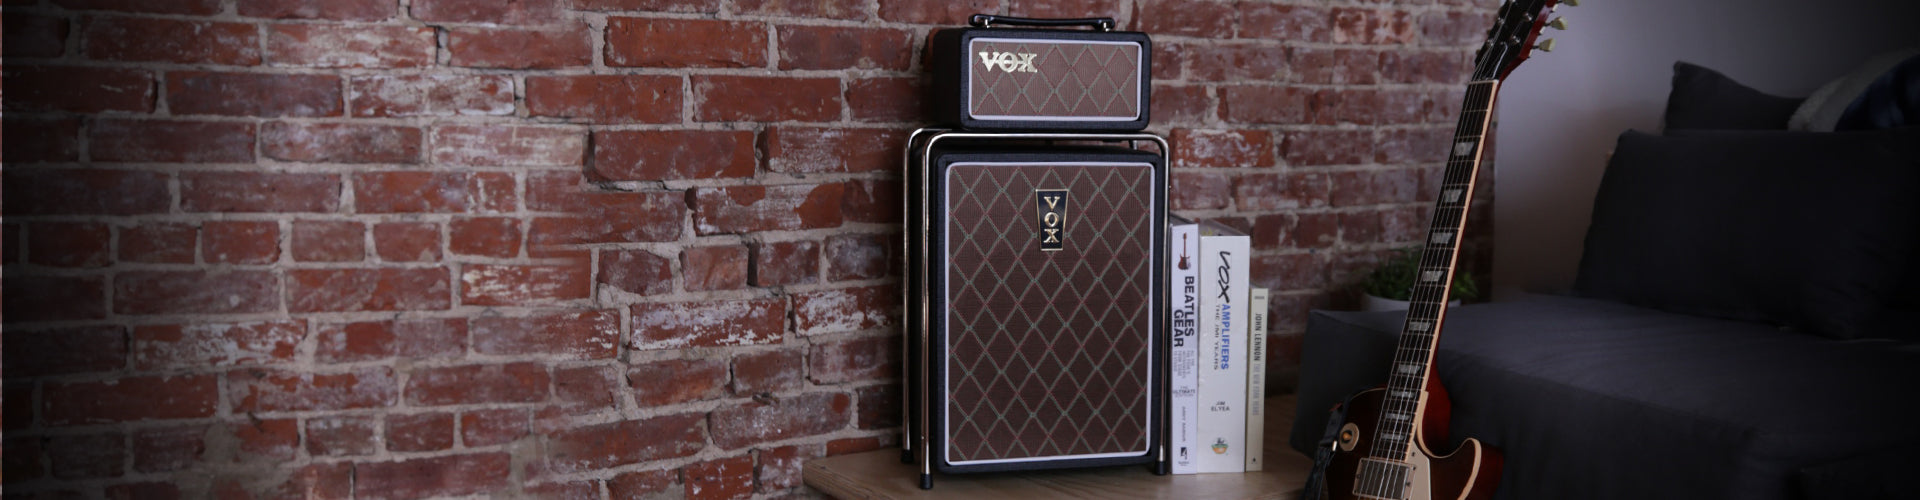 Vox Mini Superbeetle Amplifier